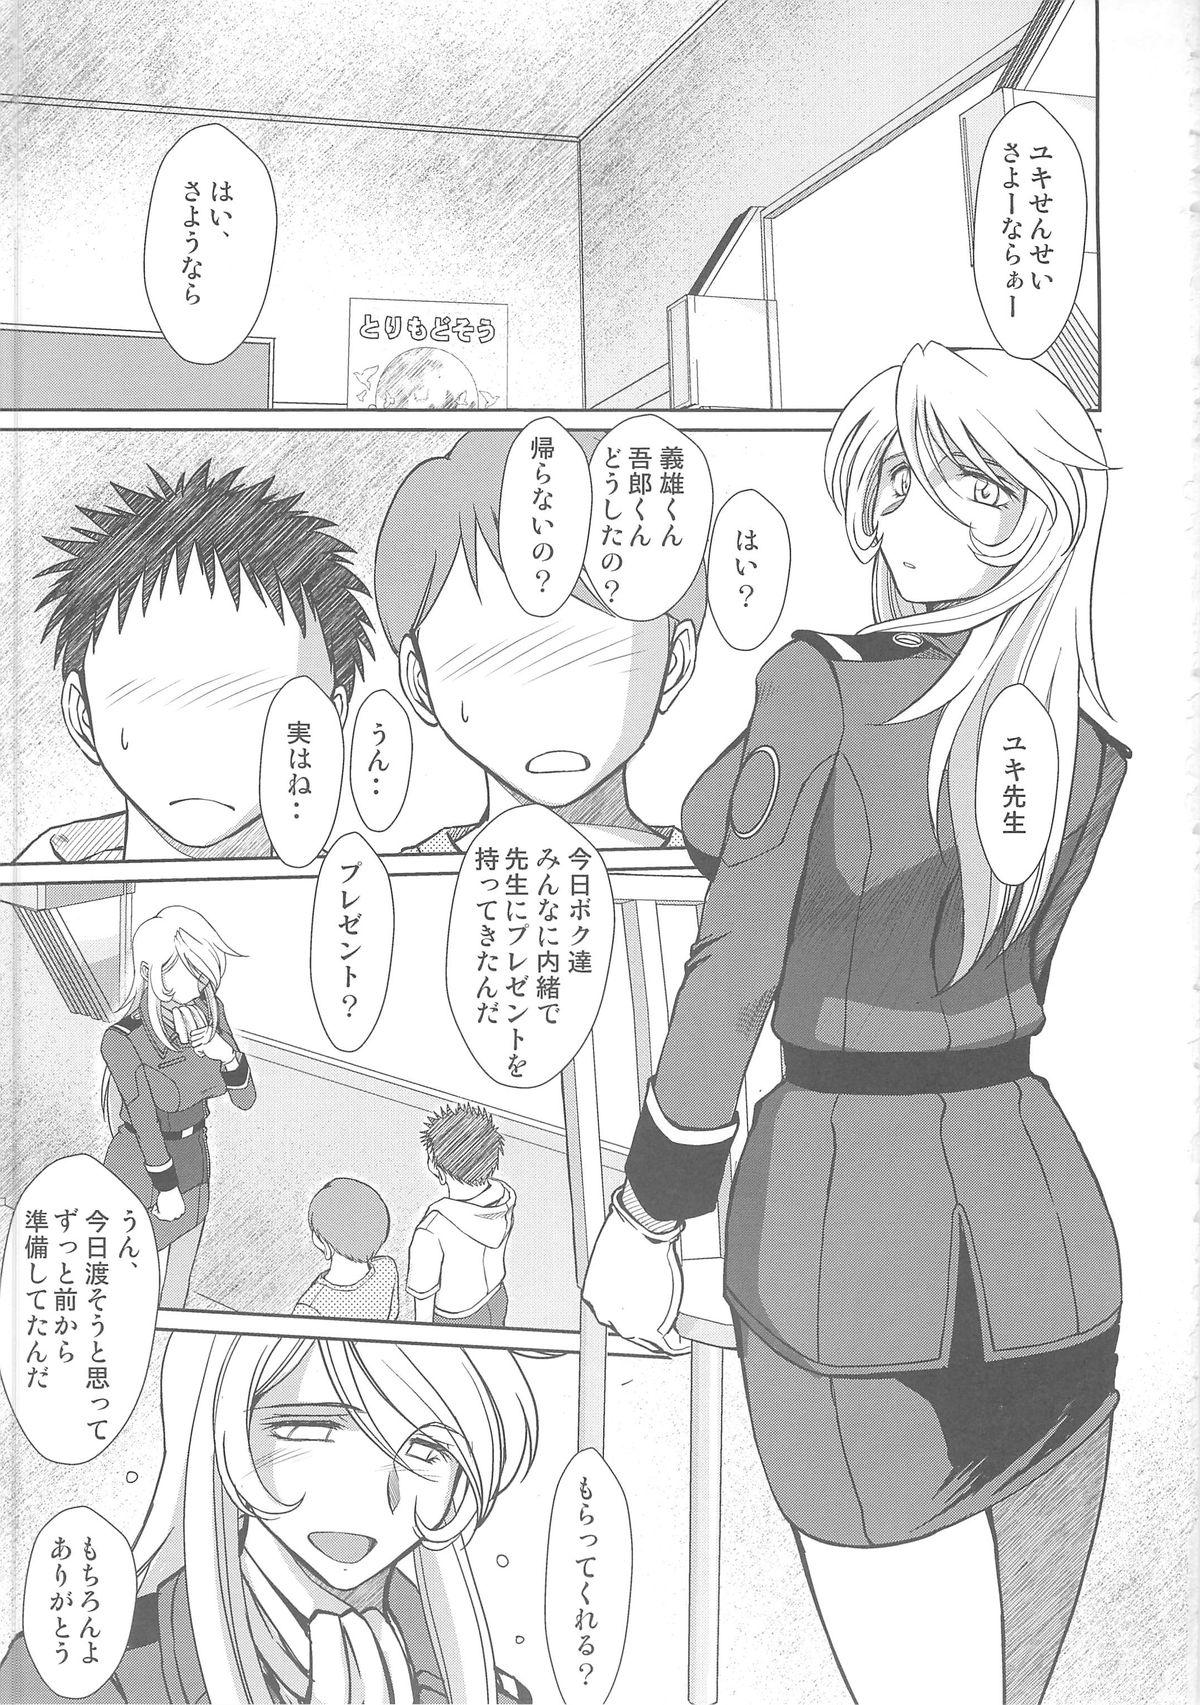 Innocent 2199-nen no Mori Yuki - Space battleship yamato Latin - Page 2